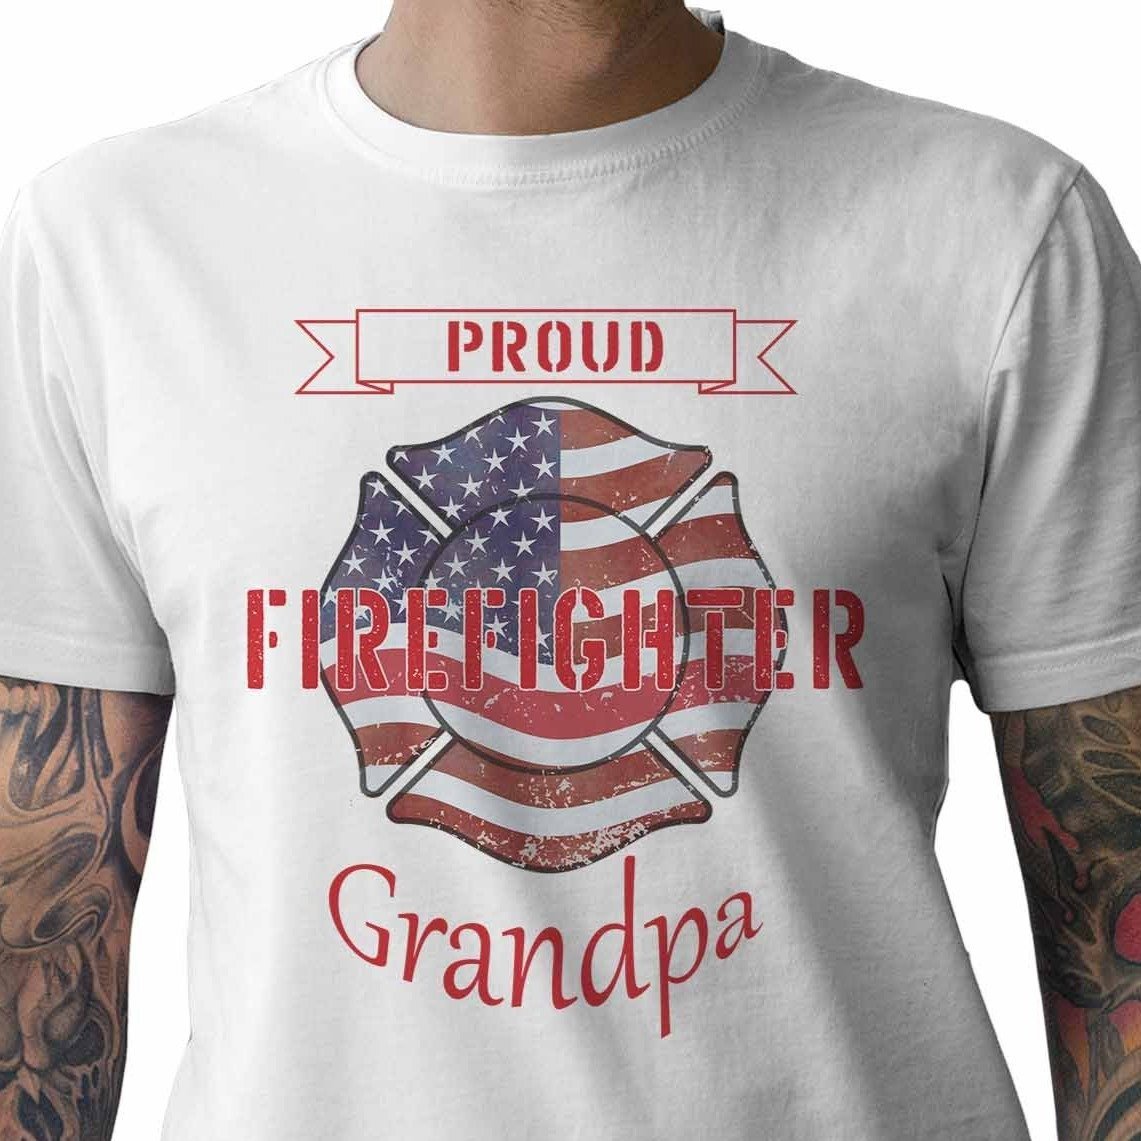 Proud Firefighter Grandpa - My Custom Tee Party